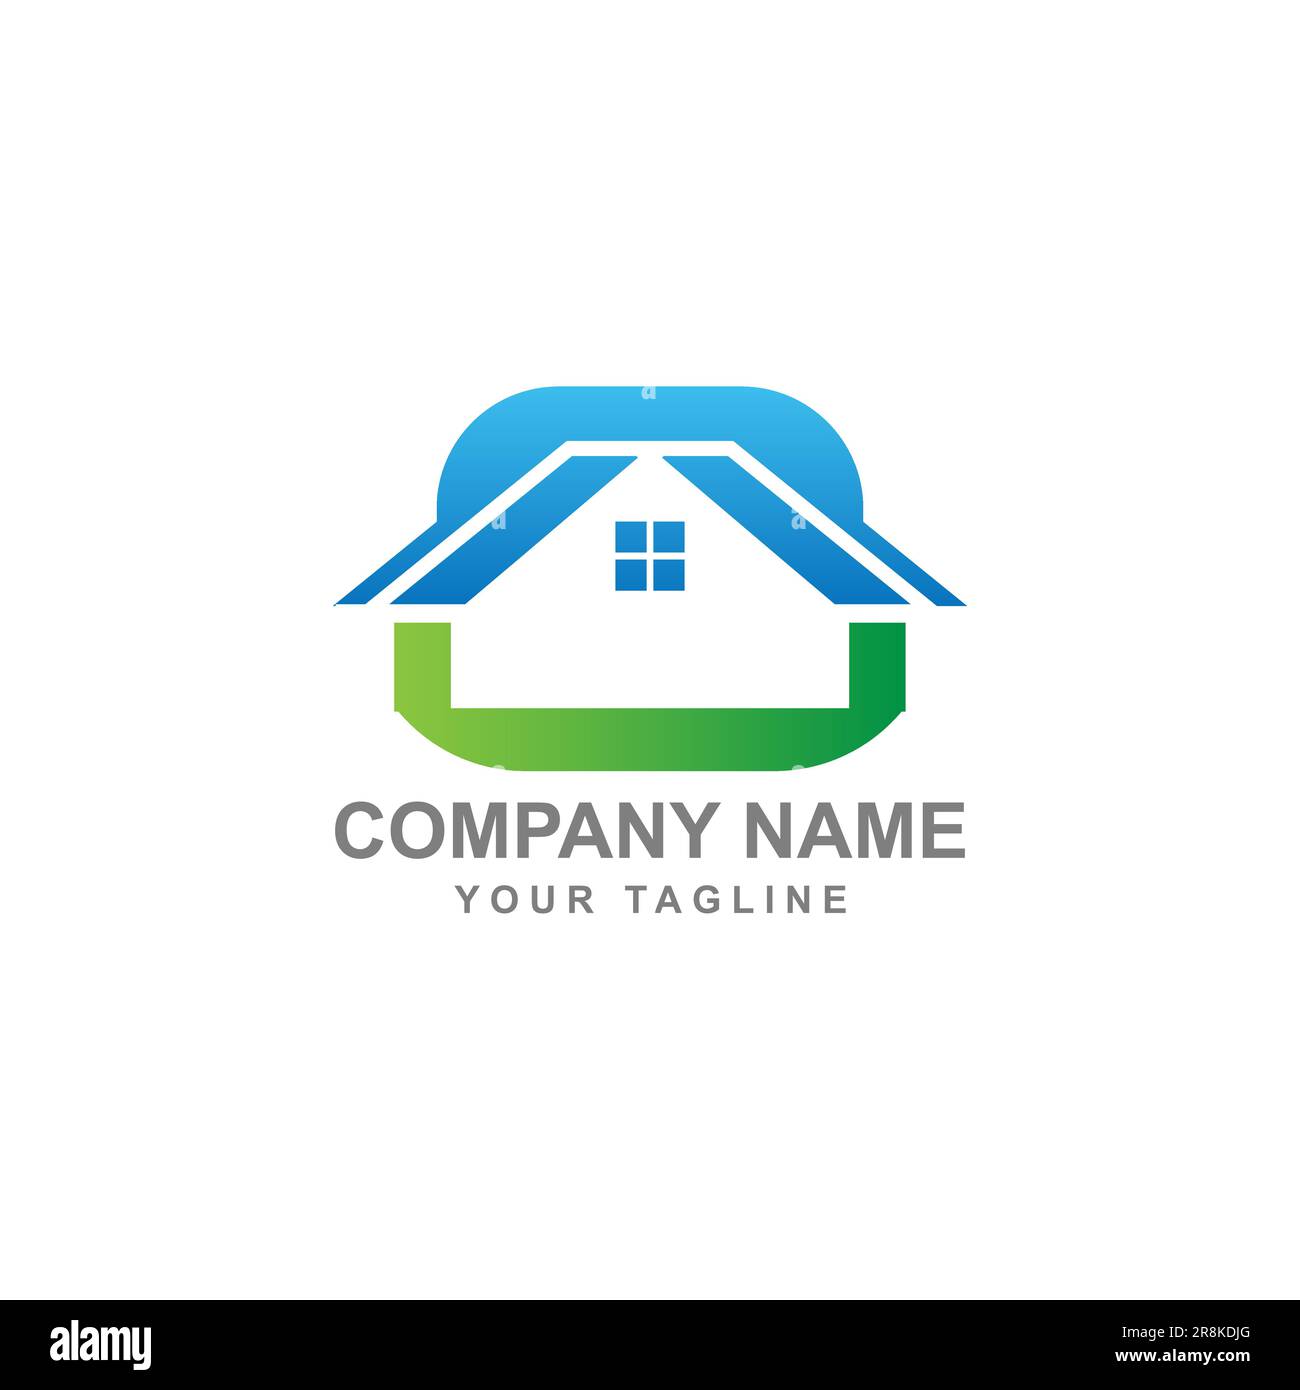 Real Estate Logo Design. Creative abstract real estate logo icon and business card template.EPS 10 Stock Vector